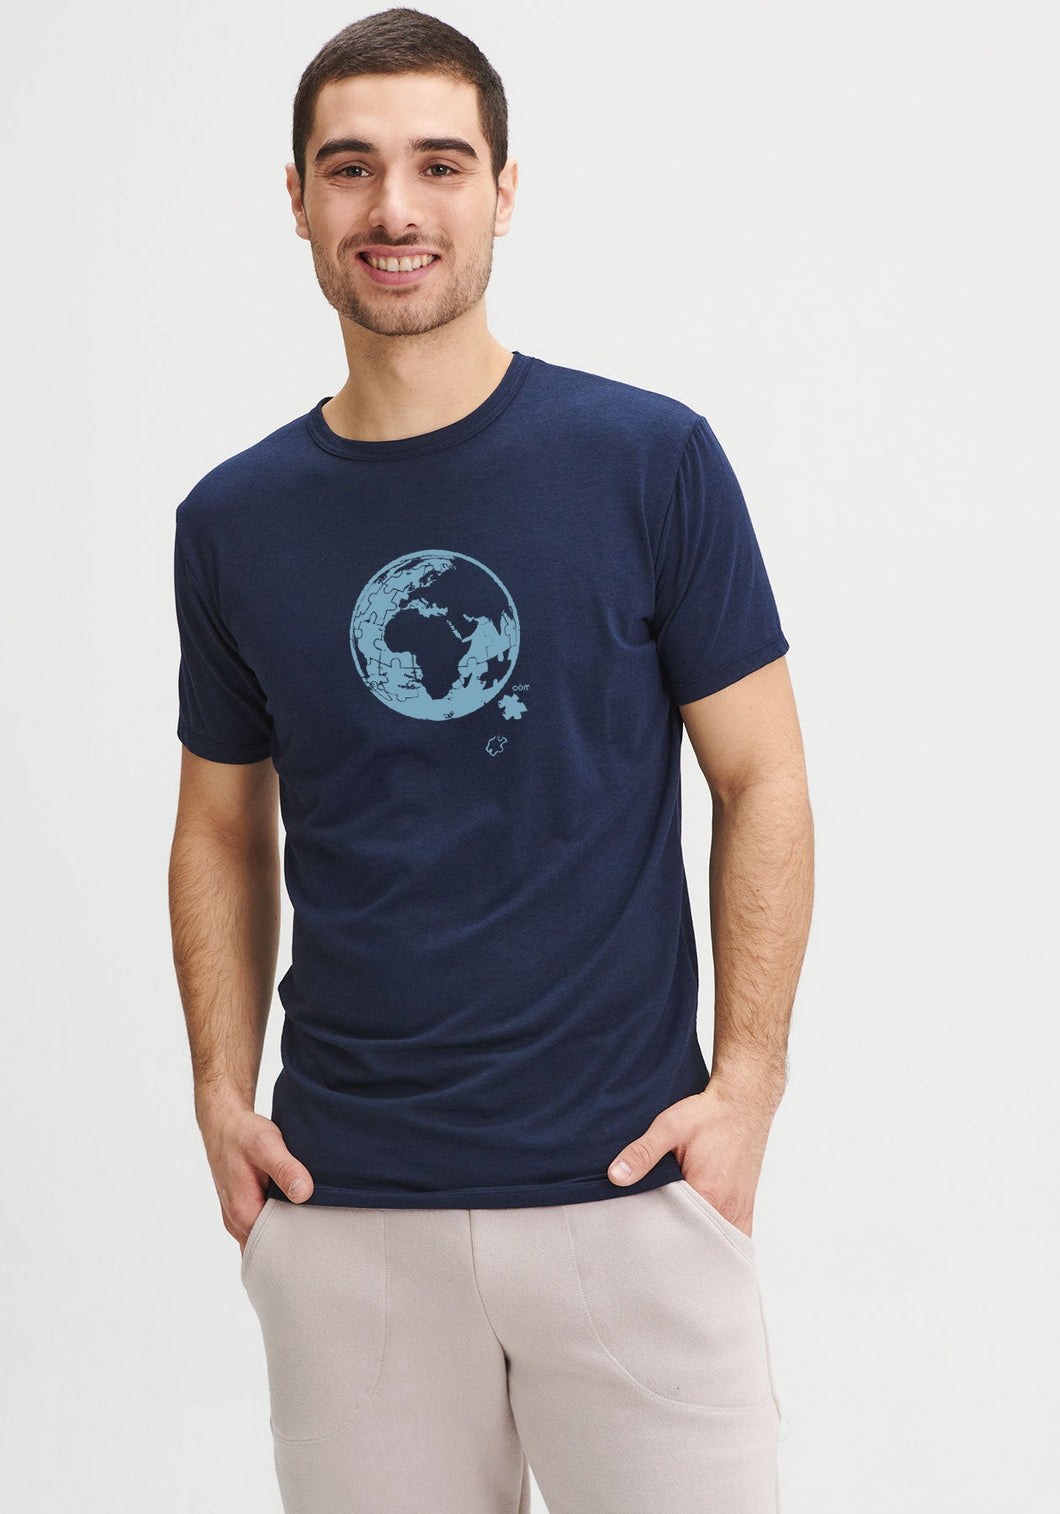 CASSE-TÊTE - T-shirt marine